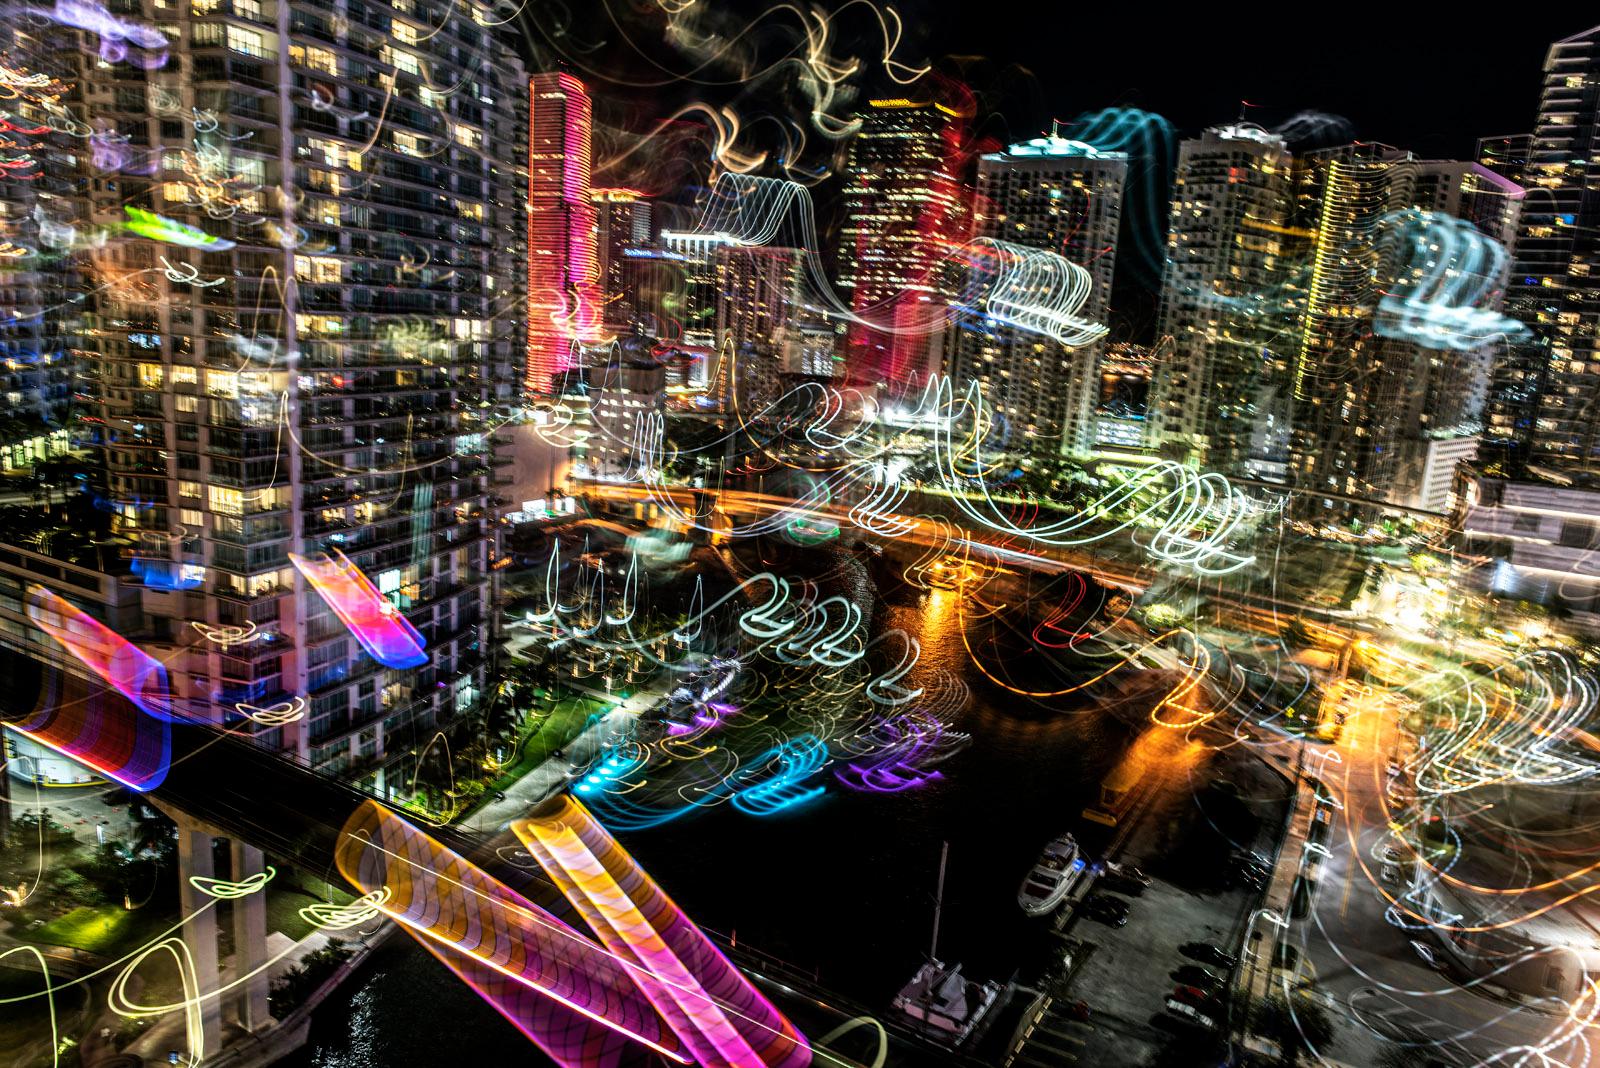 "Miami Nights"- Surreal Nighttime Photo of Brickell, Miami, Florida